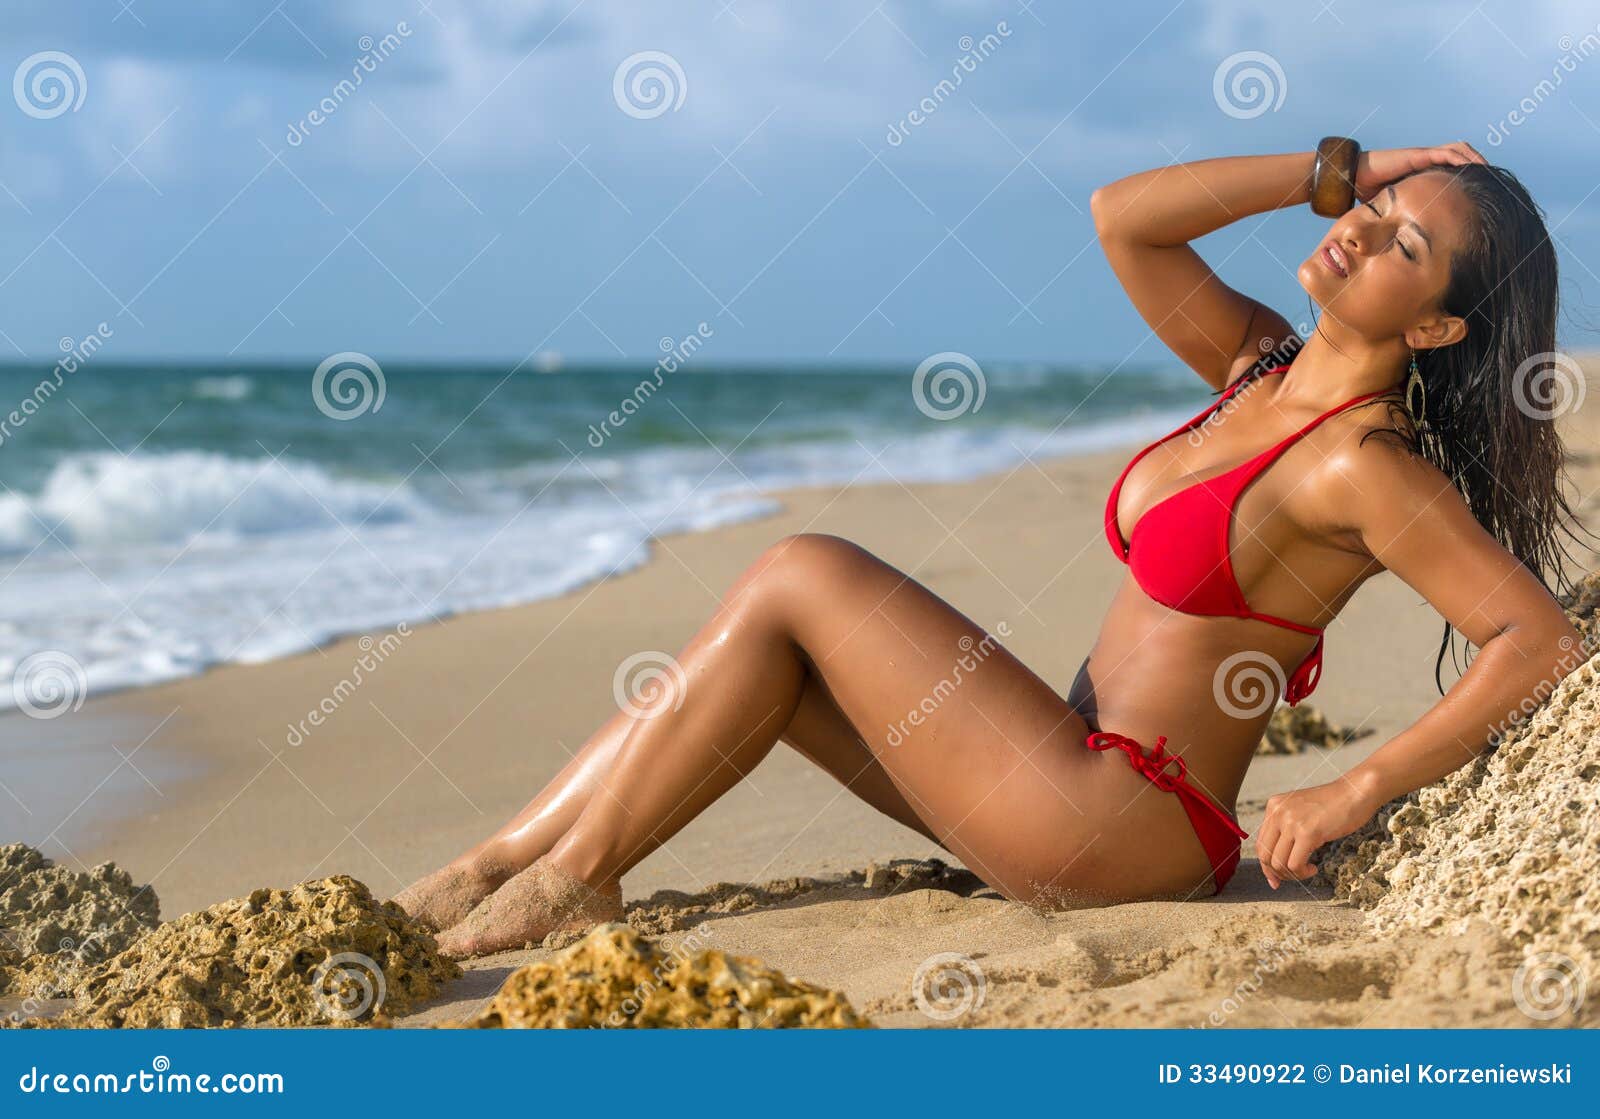 Woman Sunbathing at the Beach Stock Photo